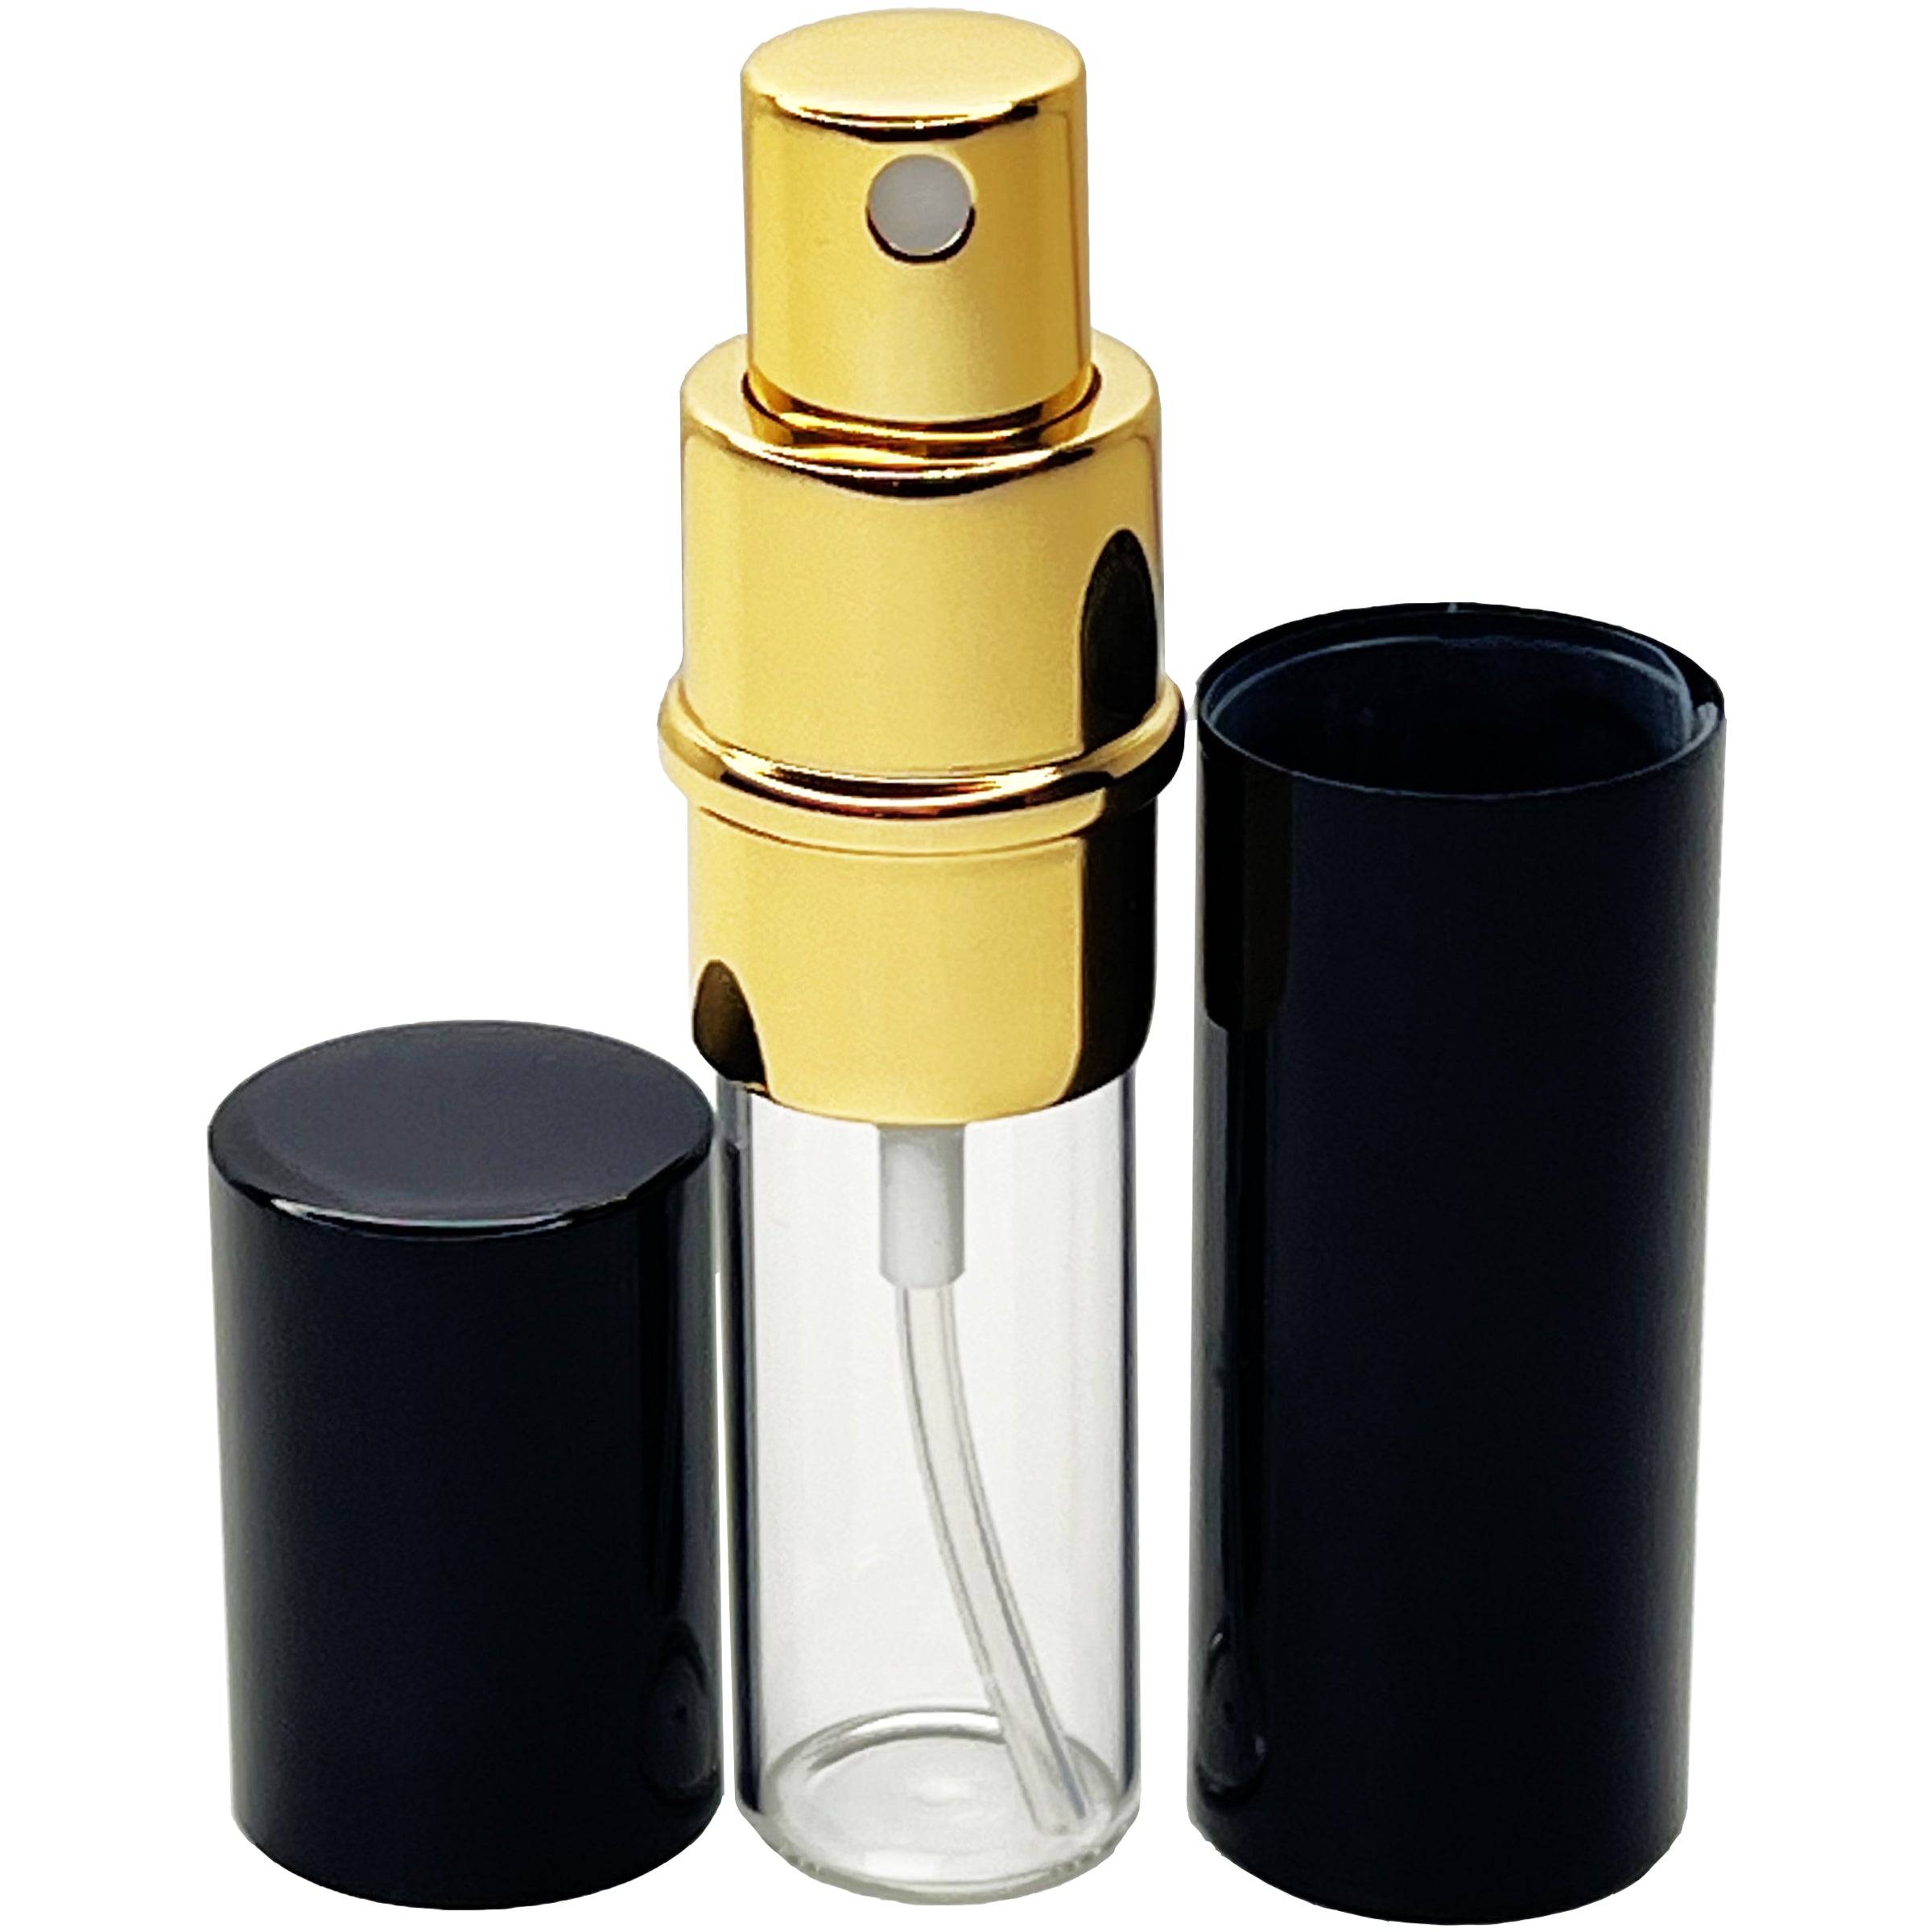 10ml 0.33oz high end aluminum black shell glass perfume bottles sprayers